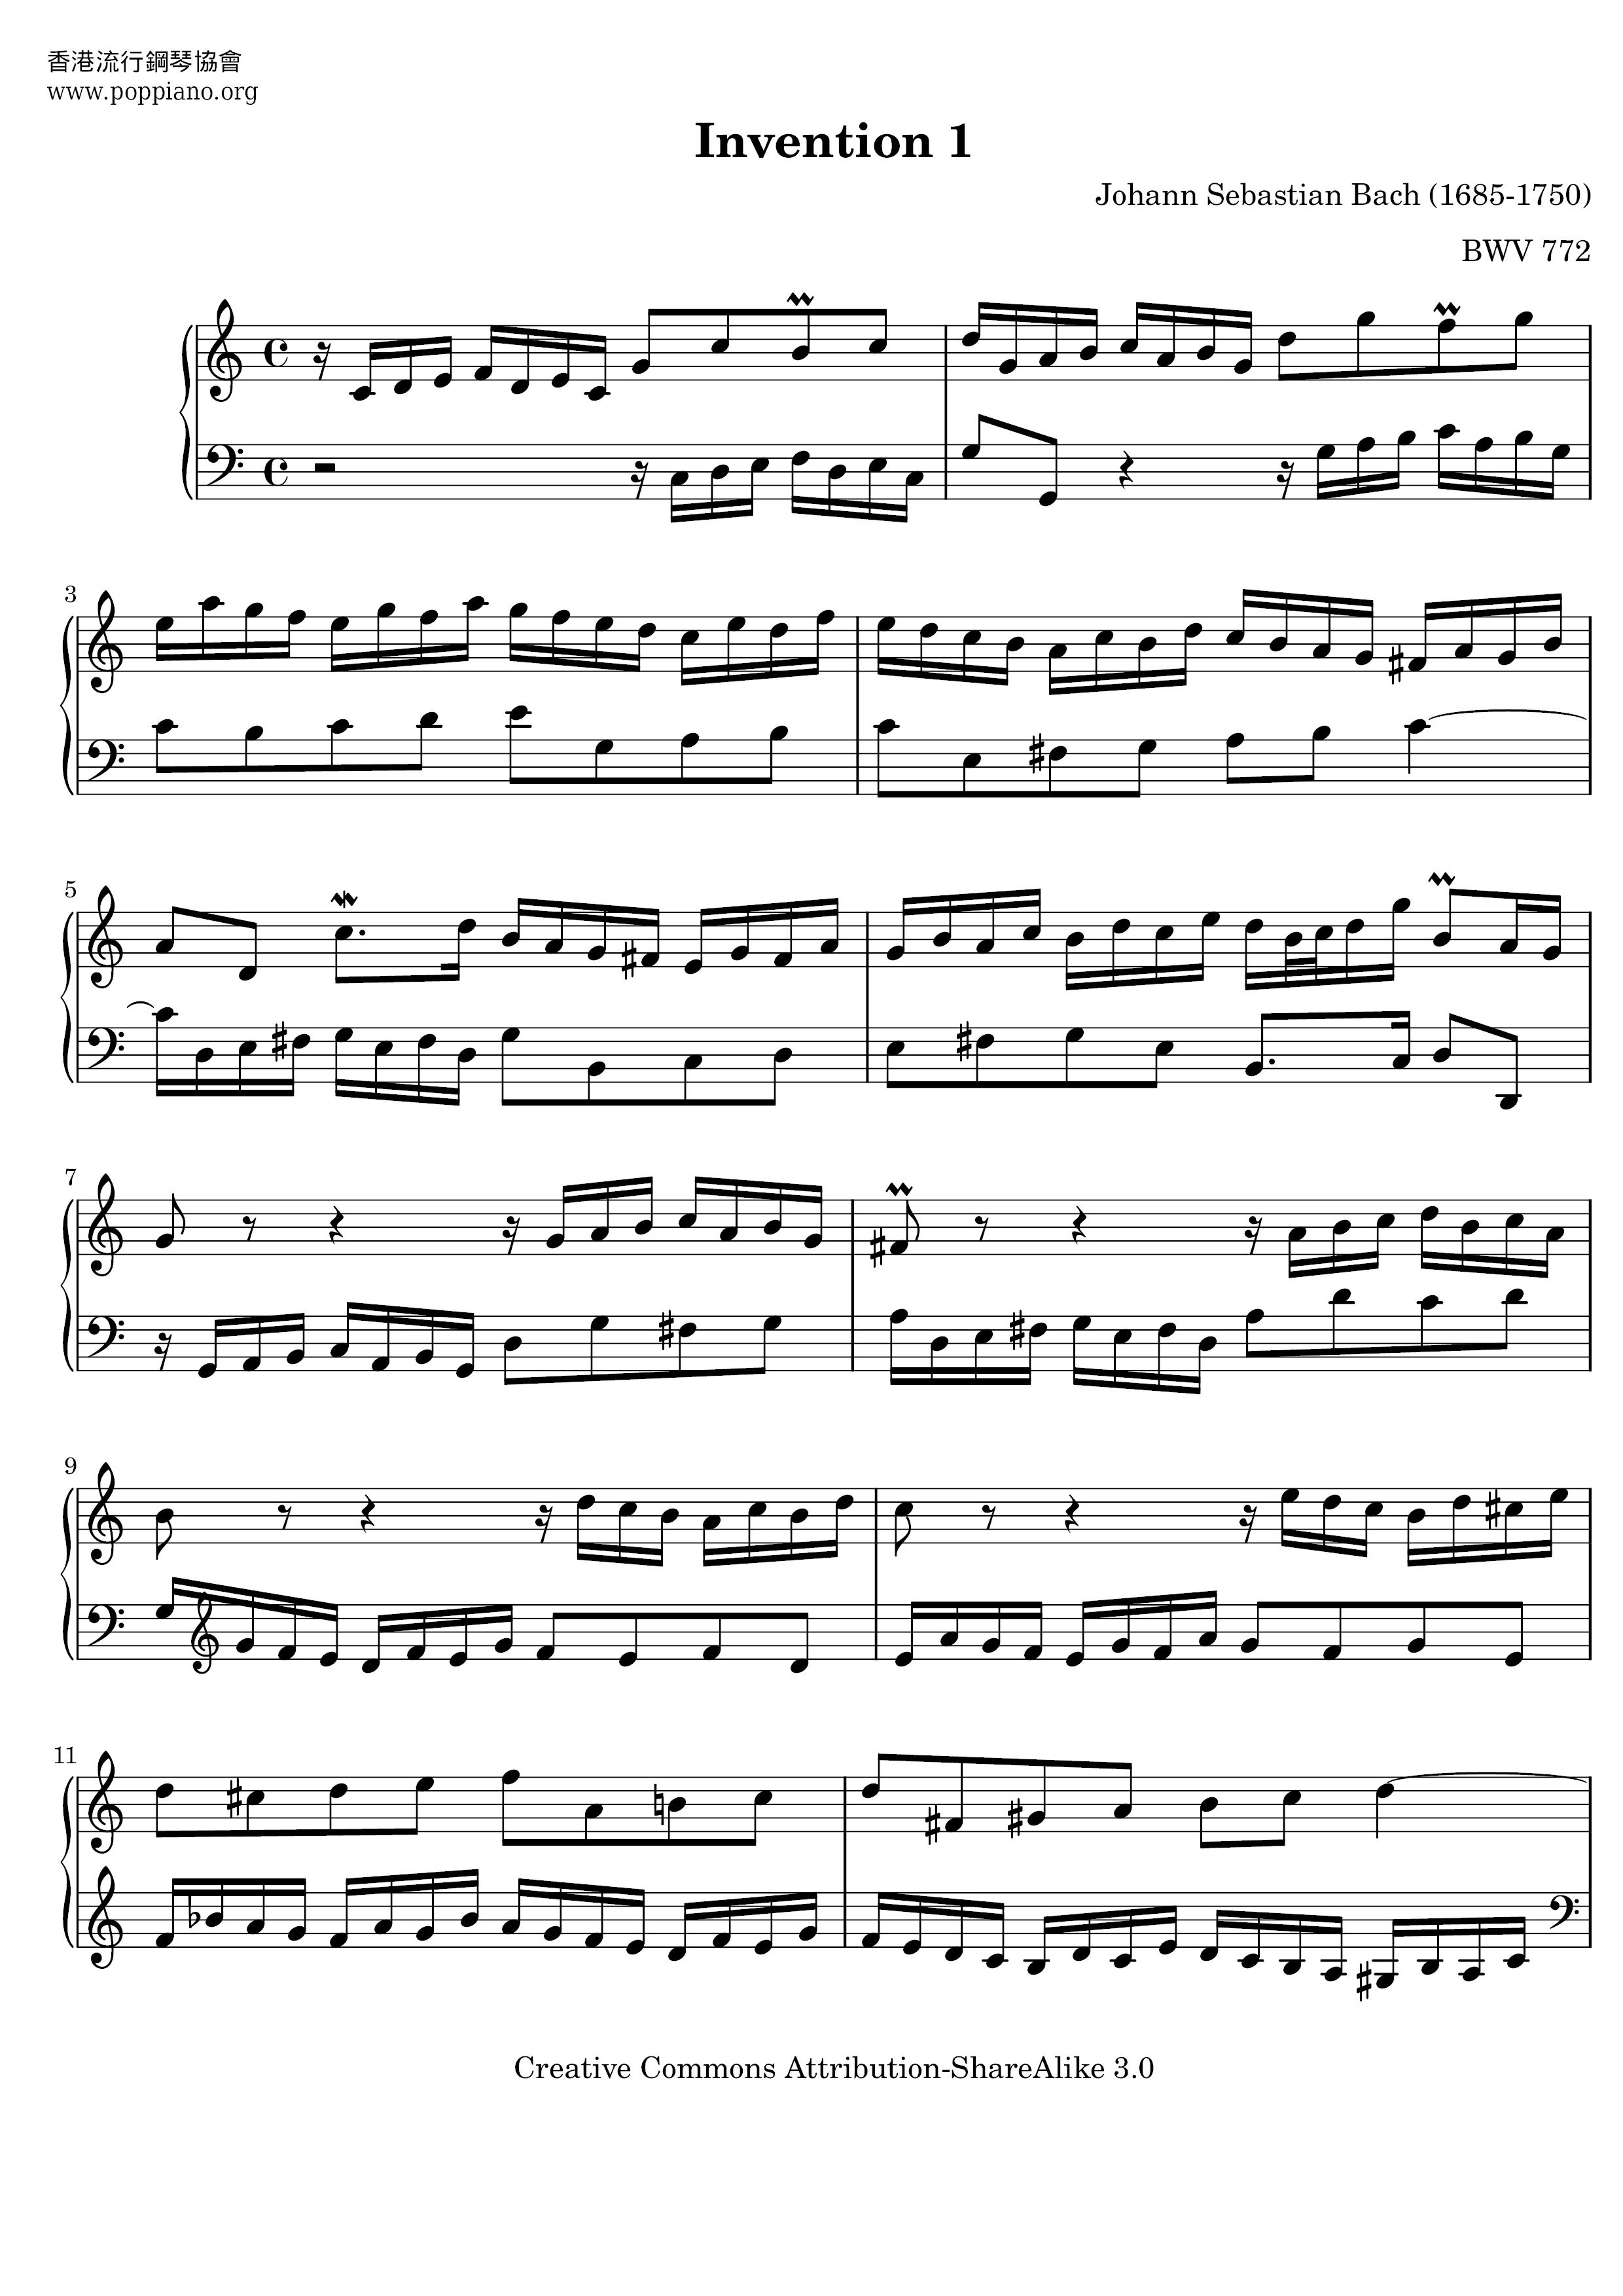 compañera de clases Descifrar Atento ☆ Bach-Invention 1, BWV 772 Sheet Music pdf, - Free Score Download ☆